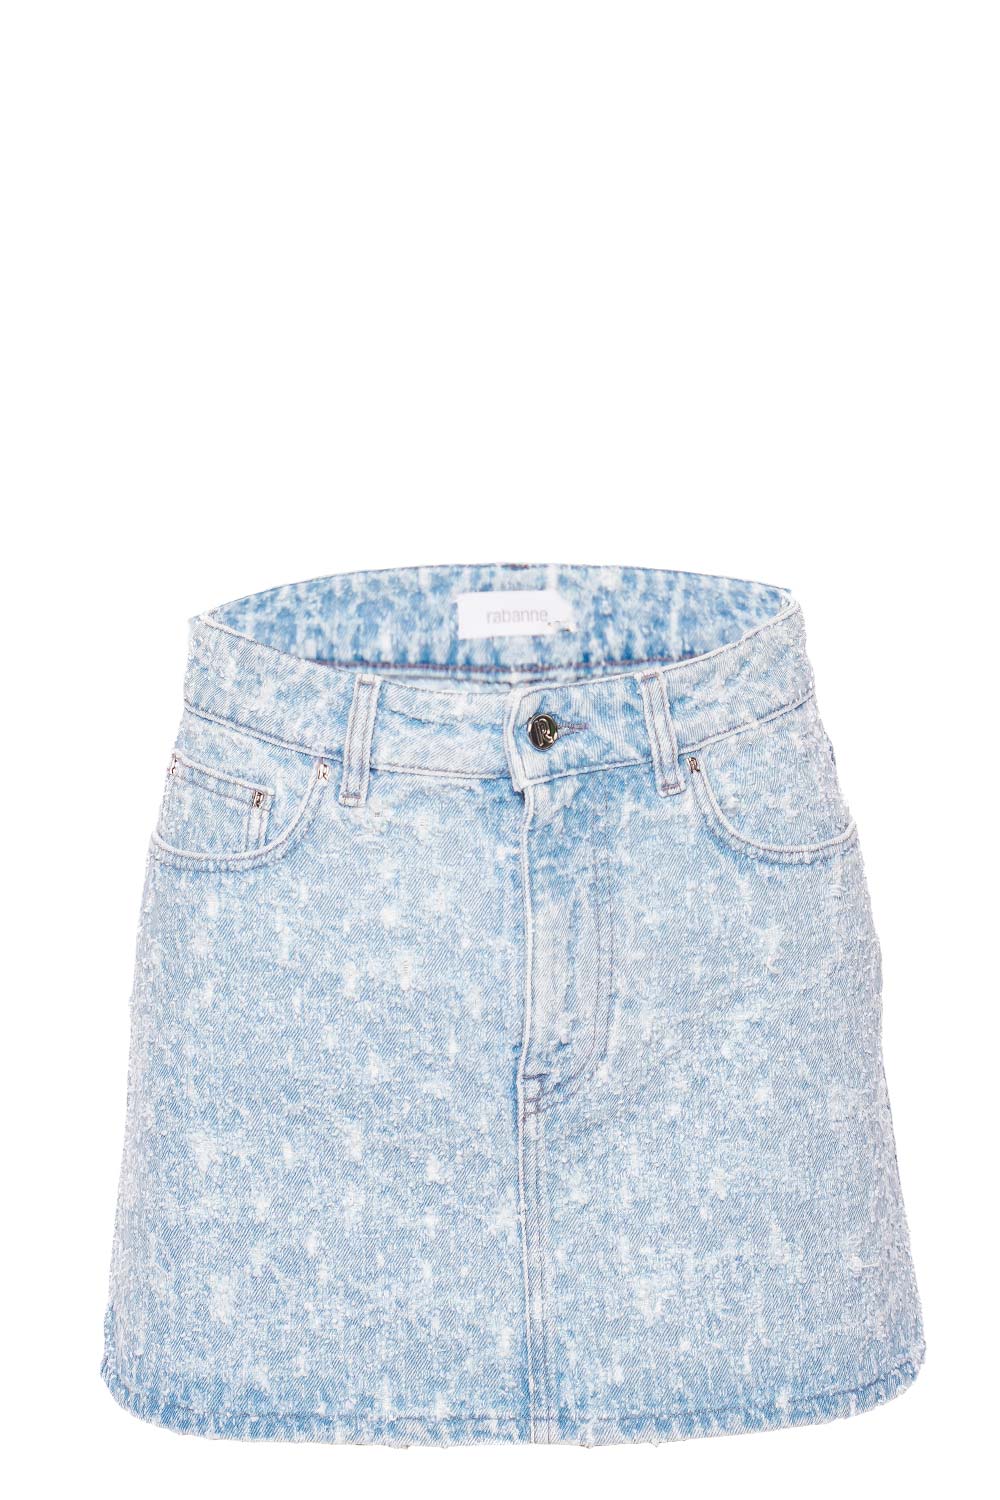 Paco Rabanne Light Wash Textured Denim Mini Skirt